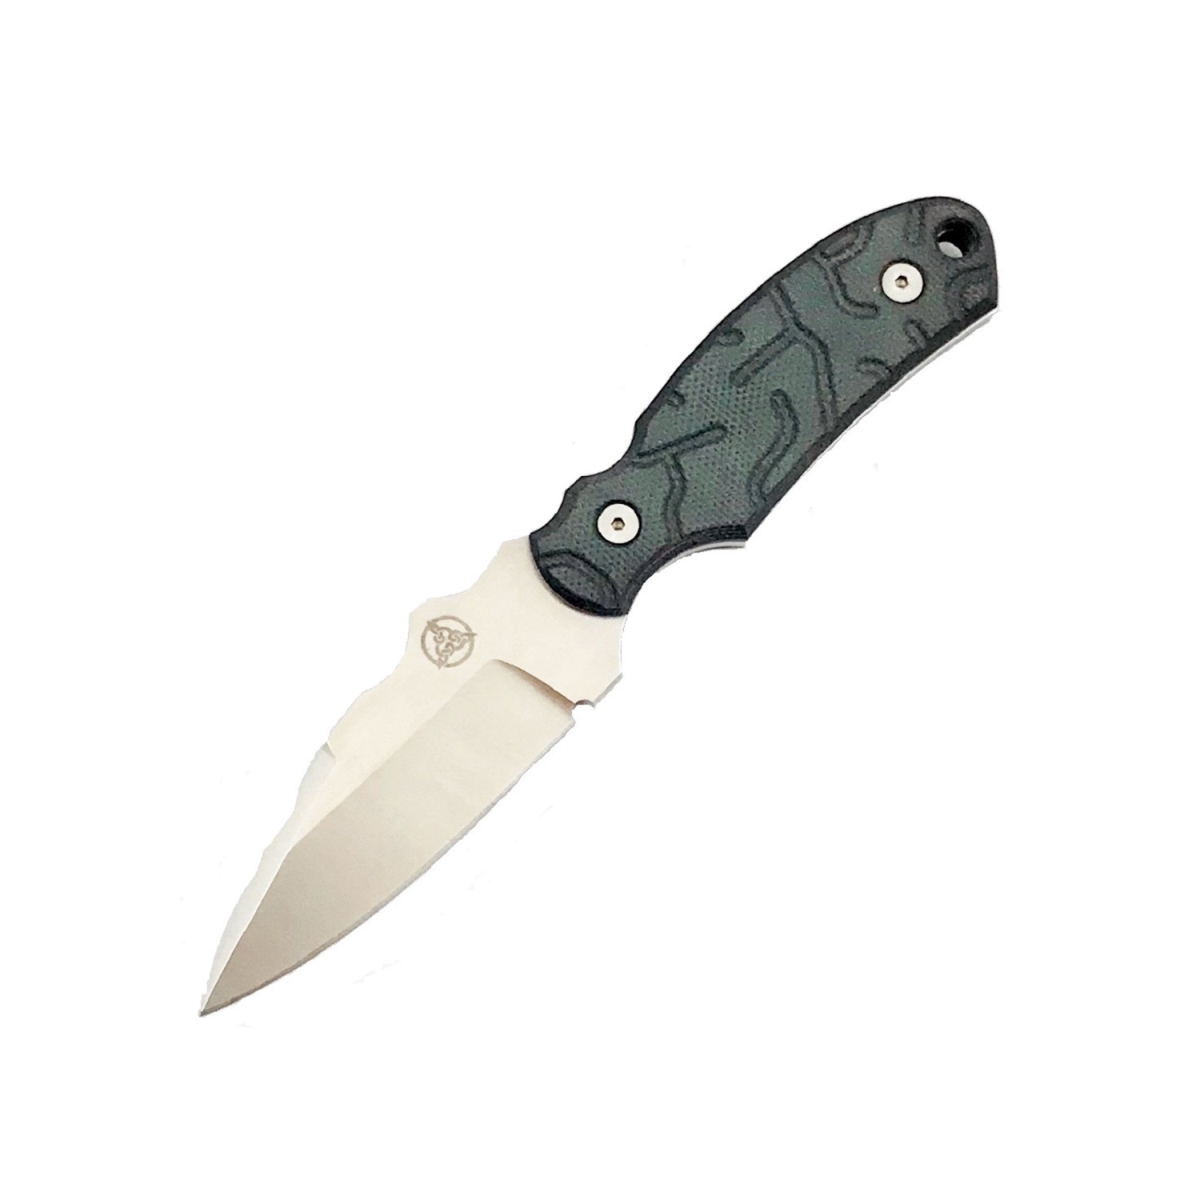 4015964 6 X 2.63 In. Arch Ally Fixed Knife Blade, Sheath Green